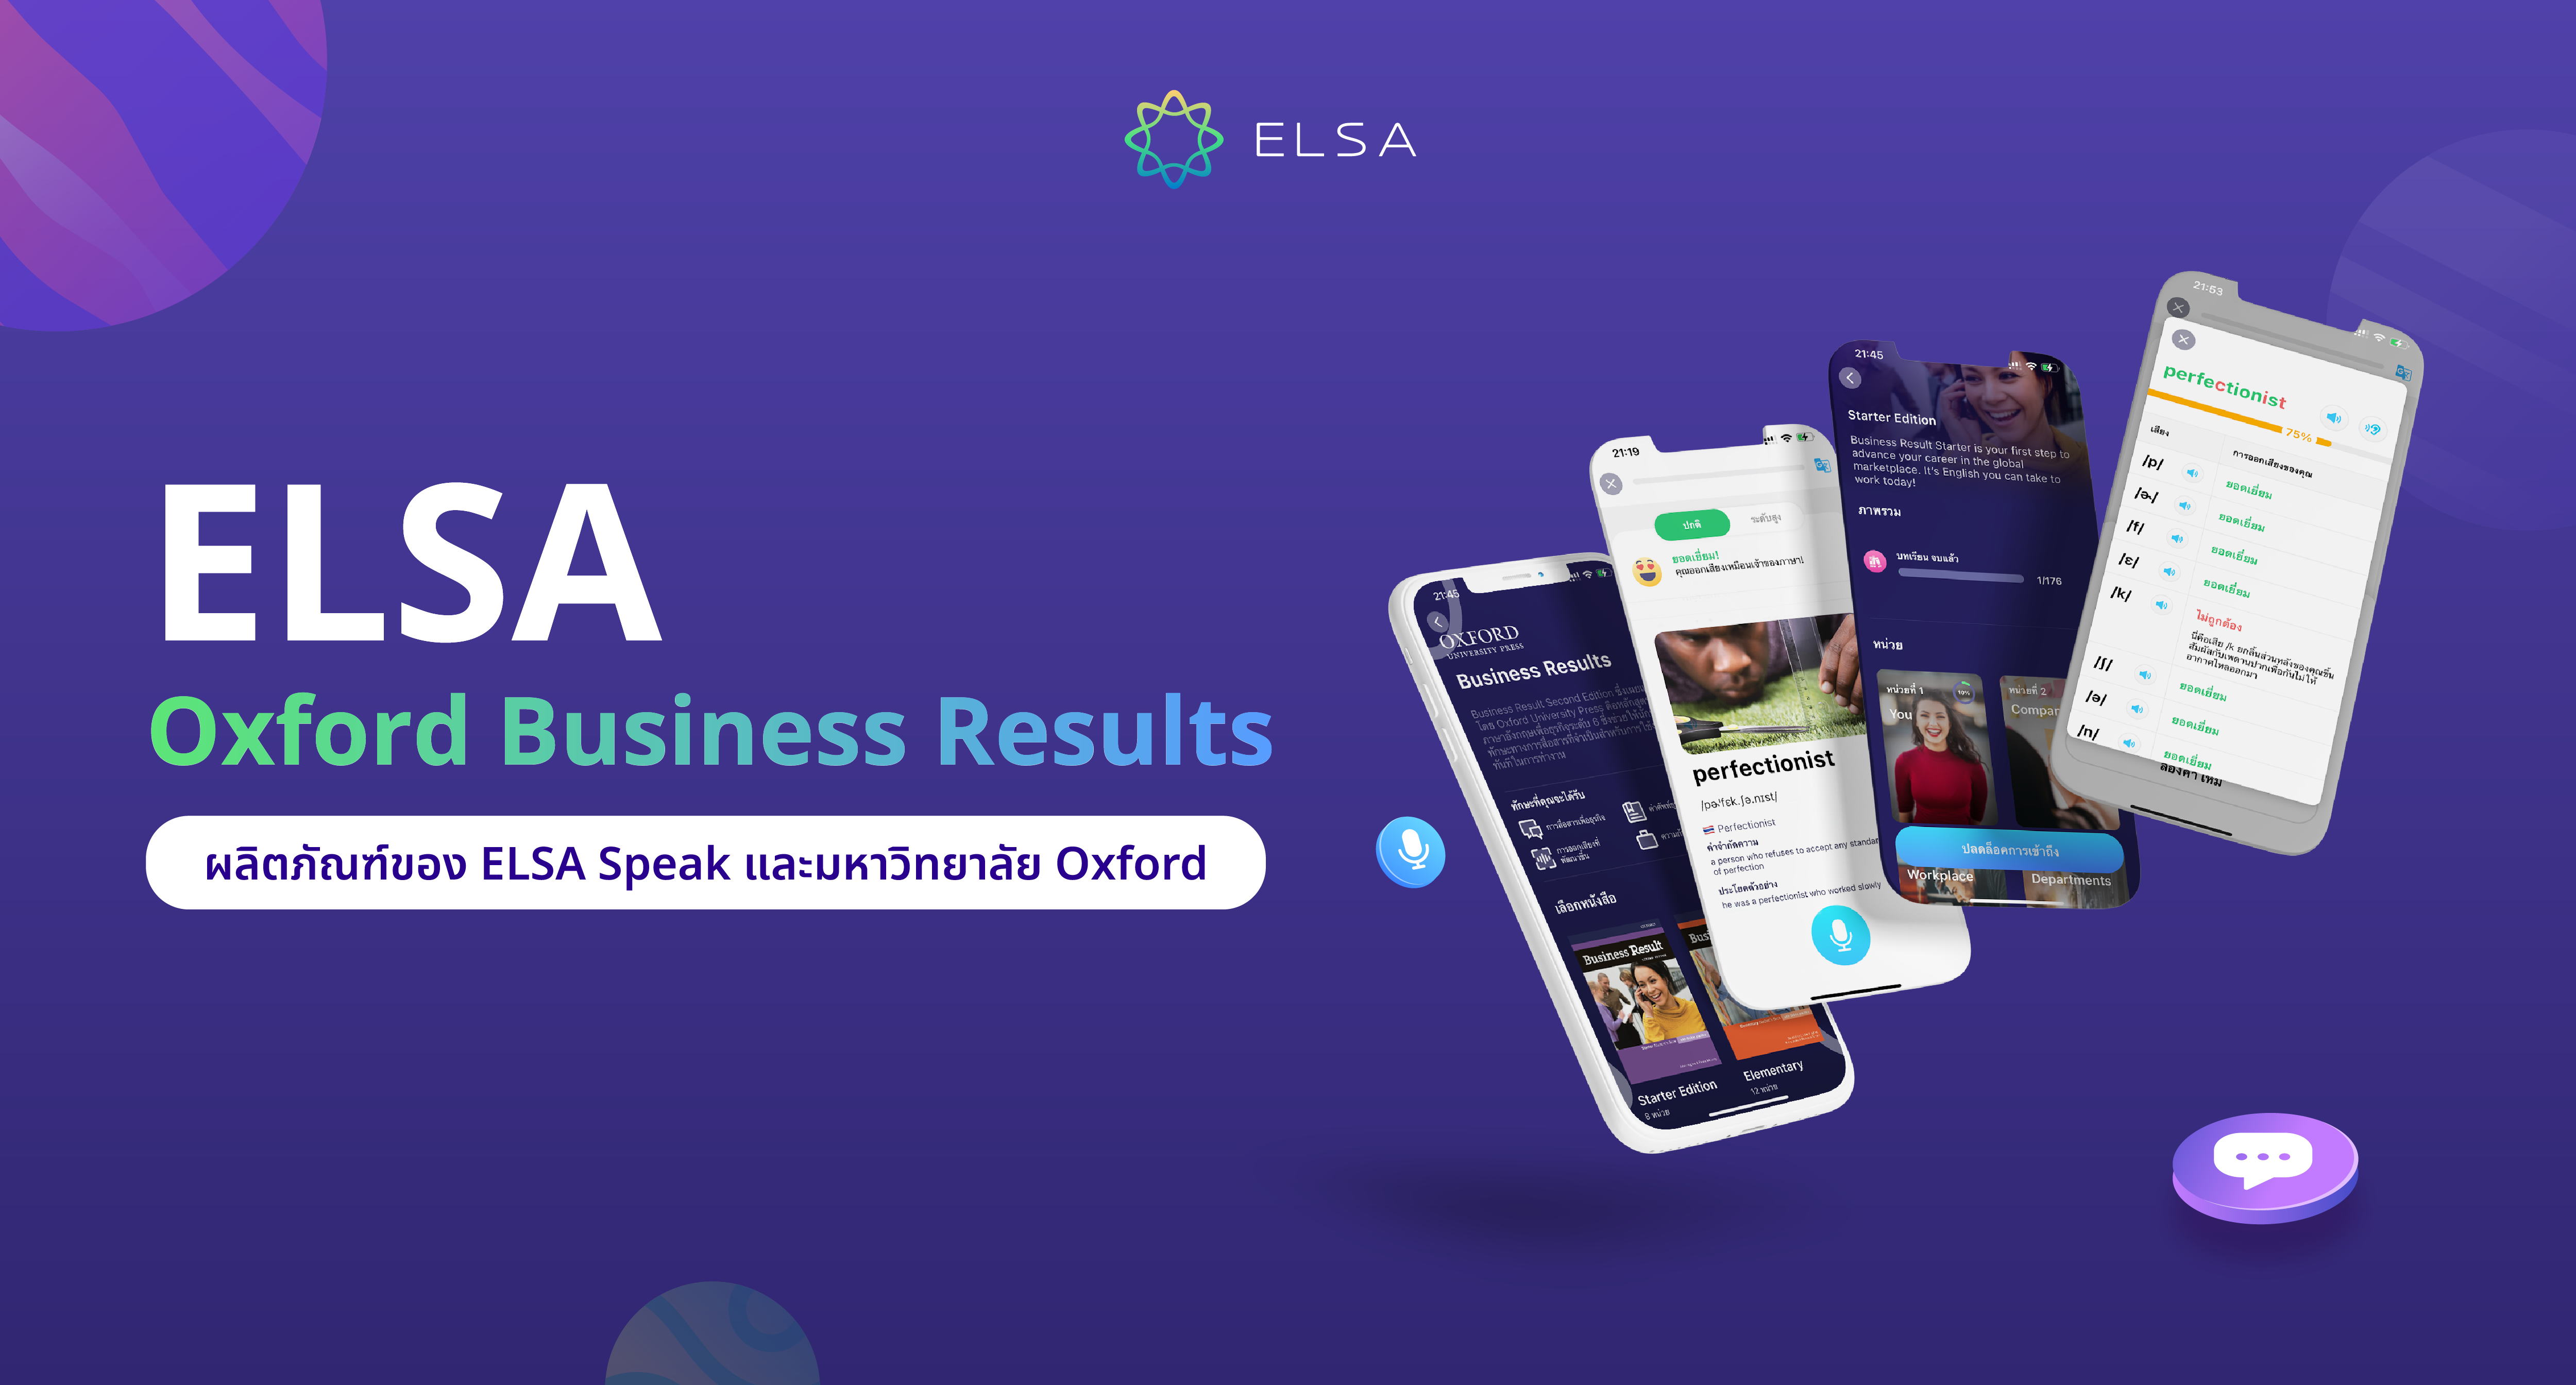 ELSA Oxford Business Results – ผลิตภัณฑ์ของ ELSA Speak และ Oxford